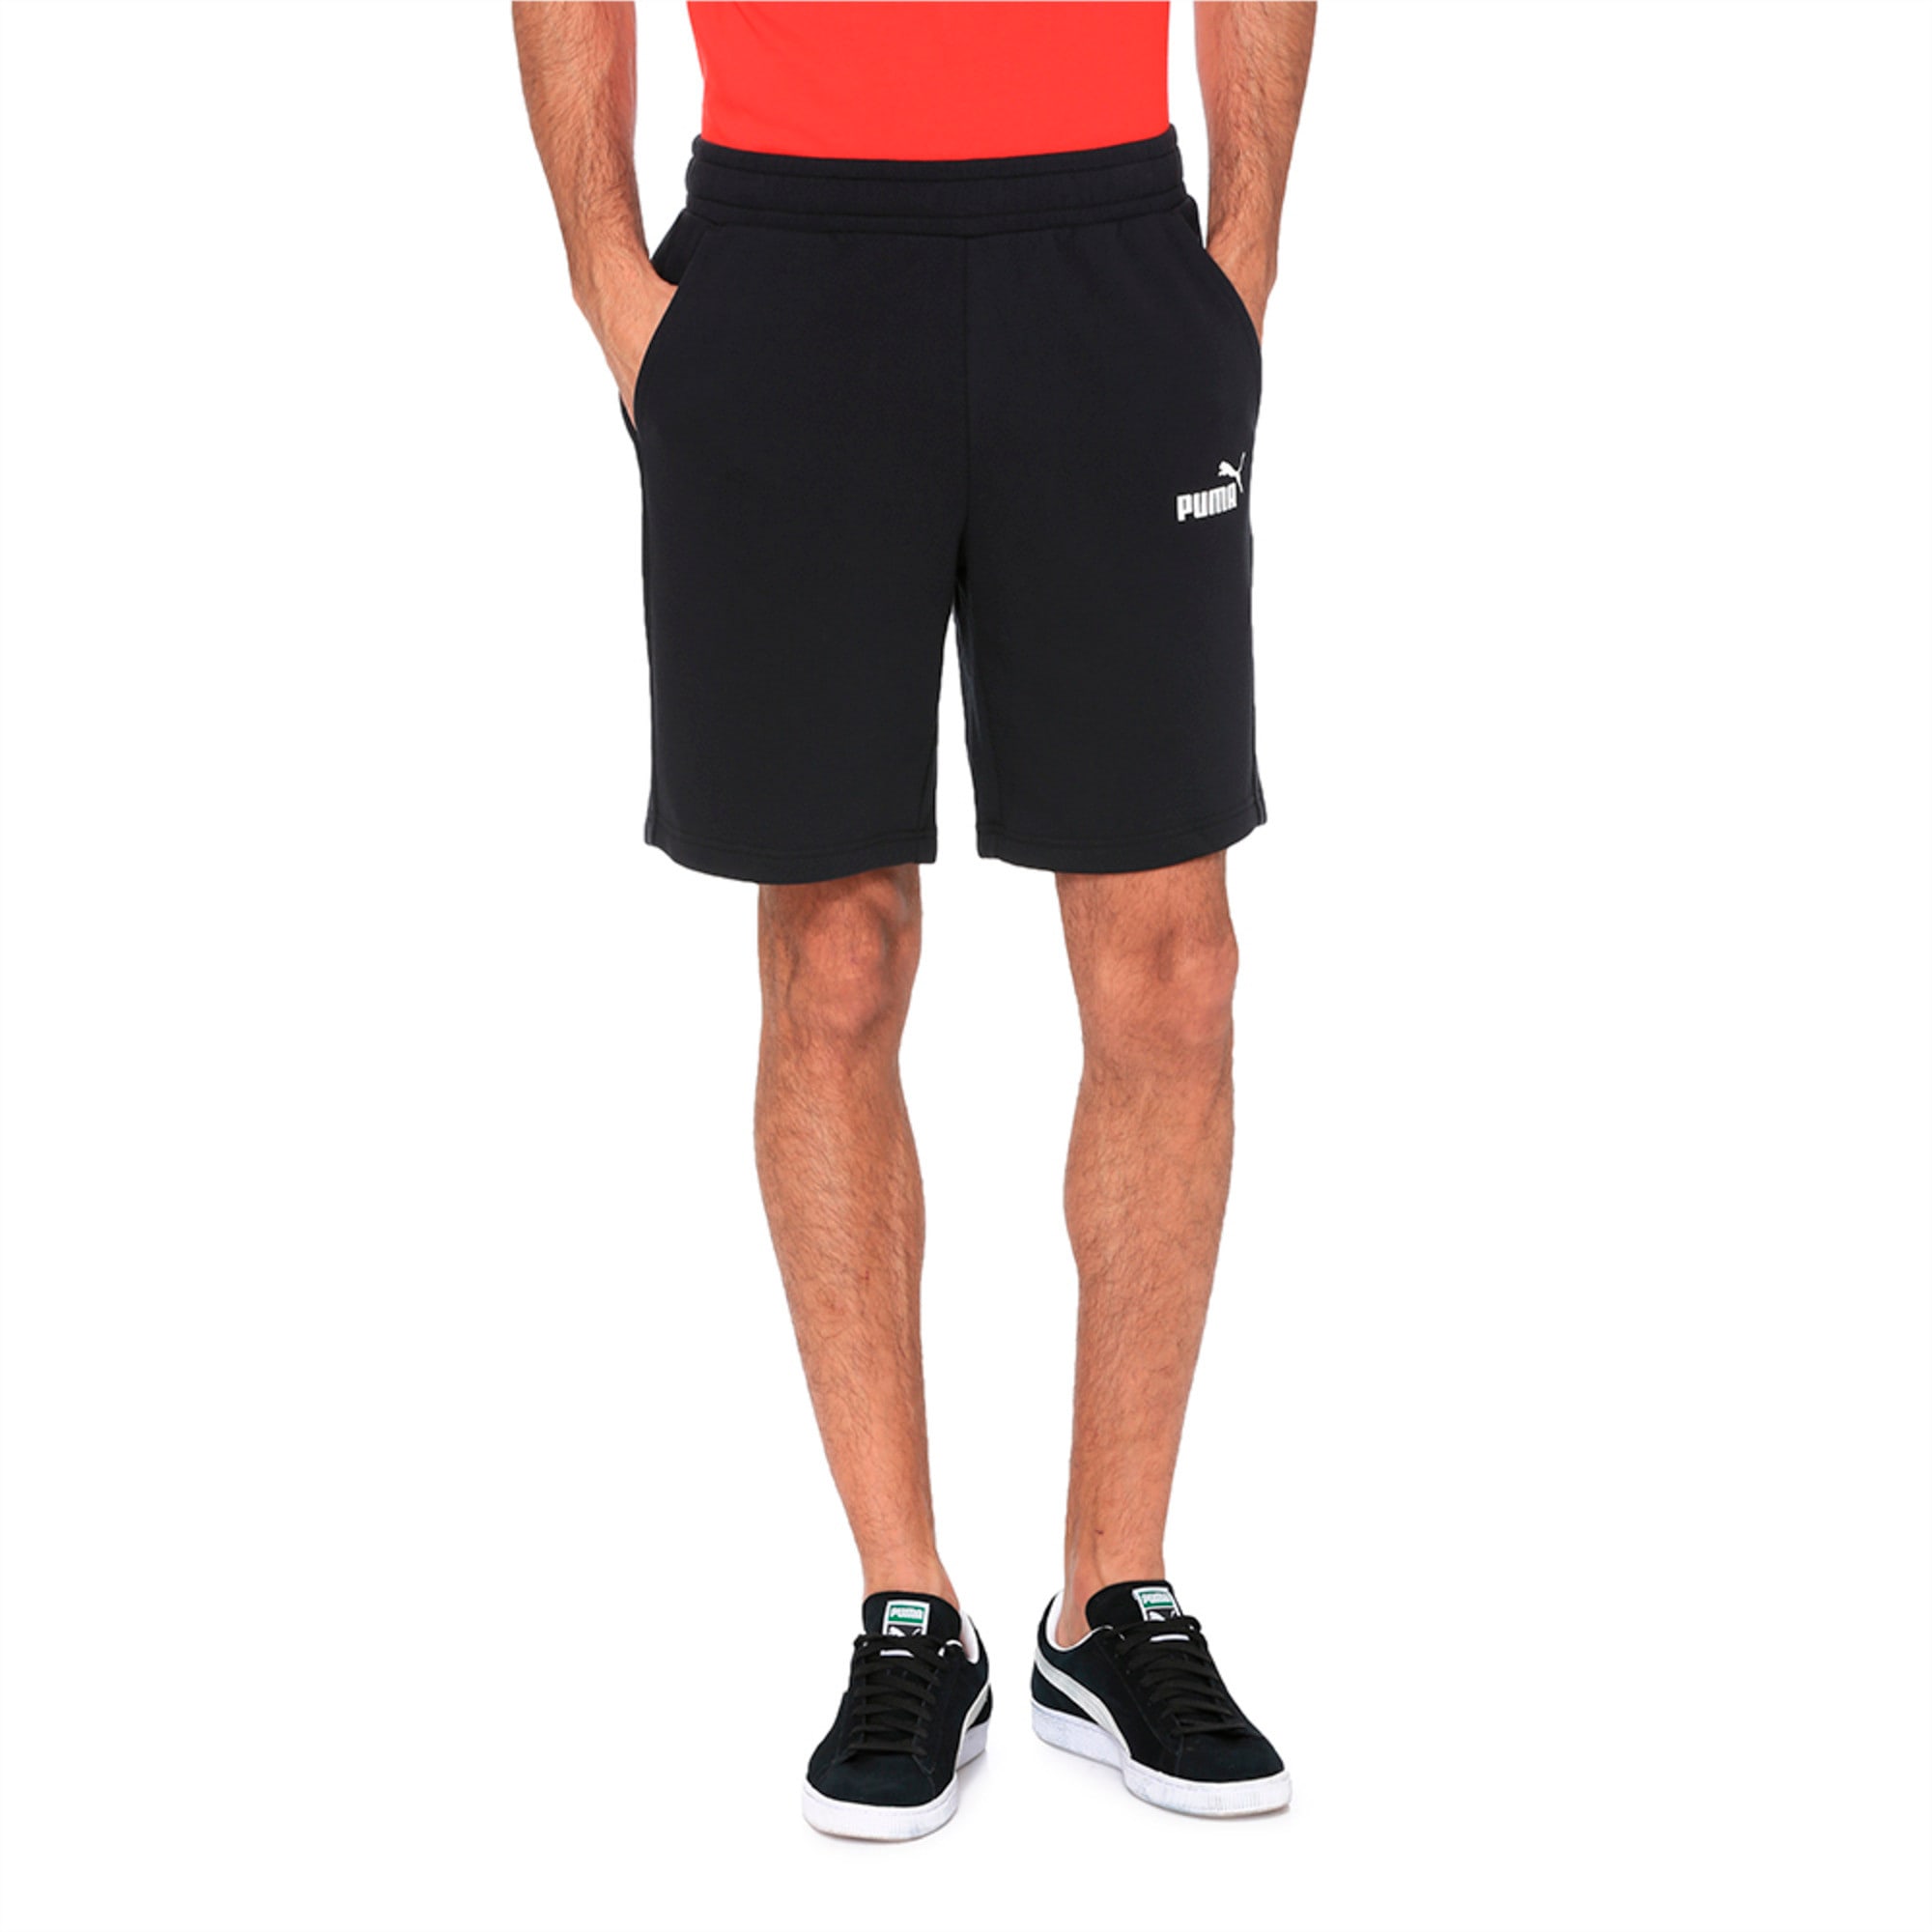 puma bermuda sweat shorts